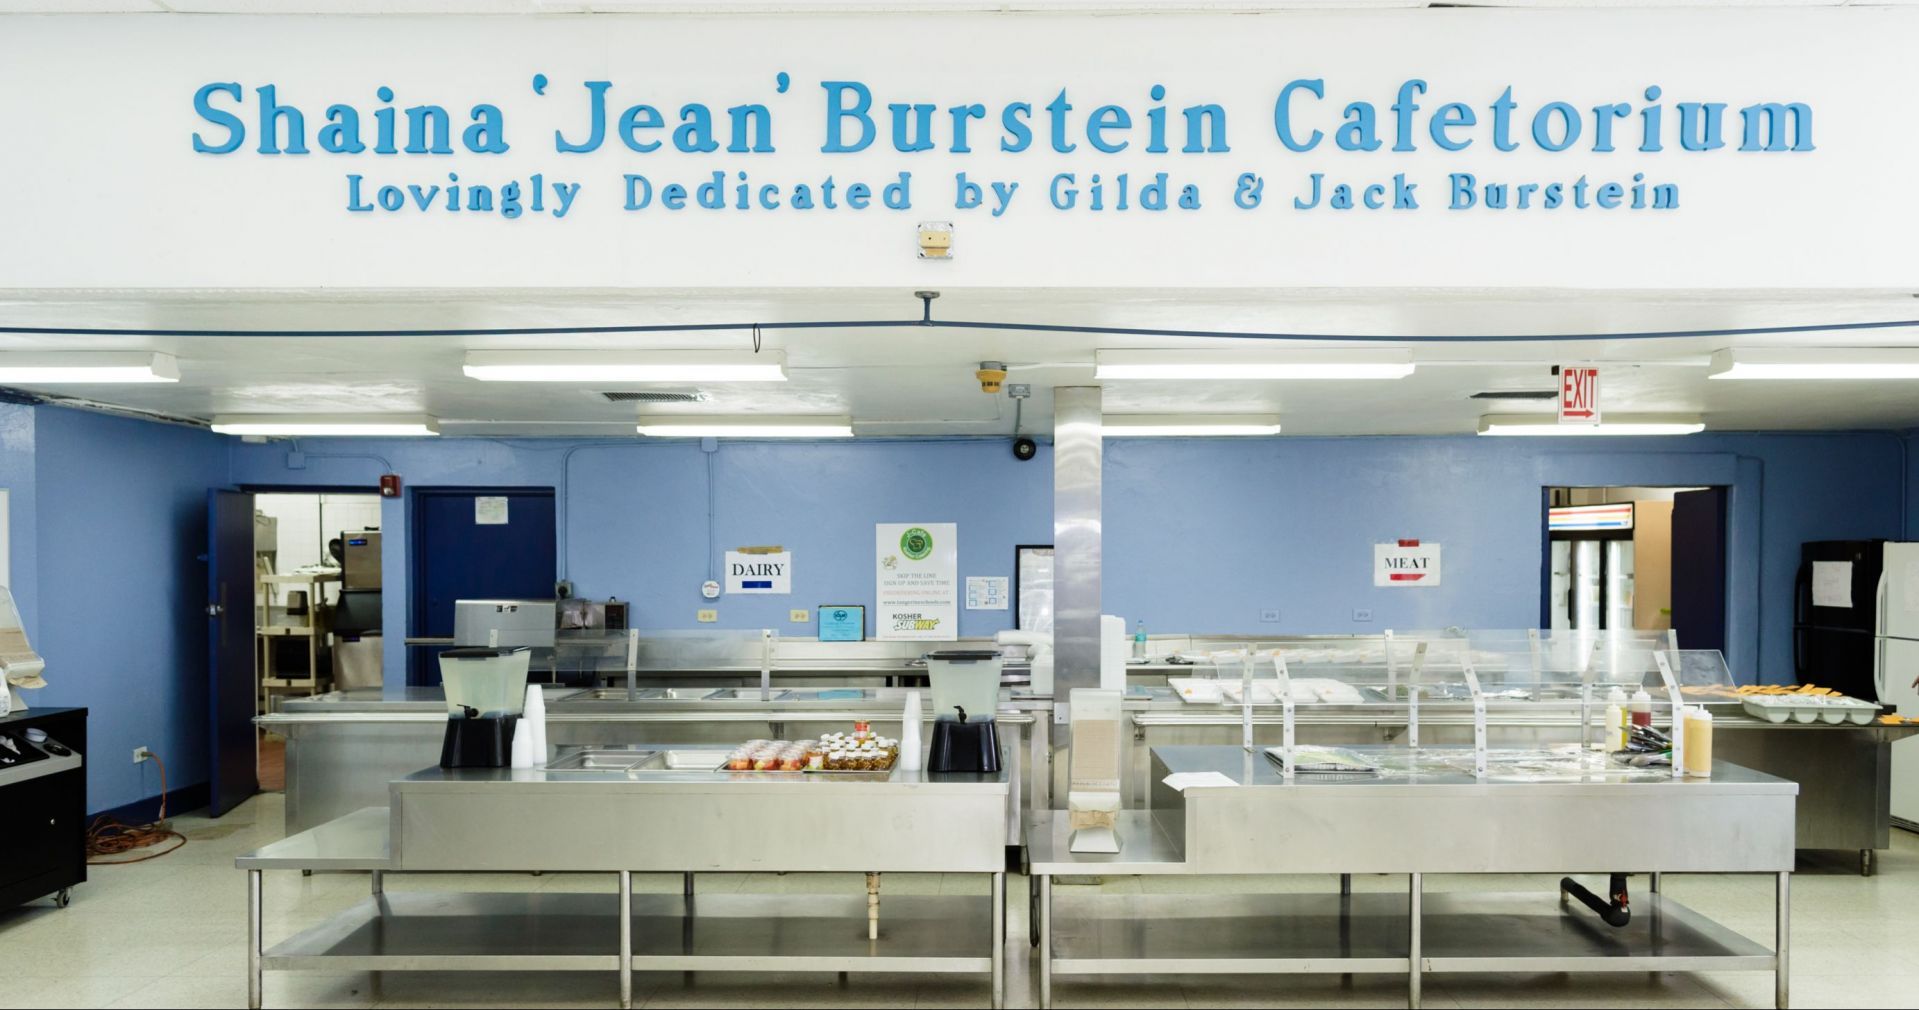 A kitchen with a sign that says shaina jean burstein cafetorium